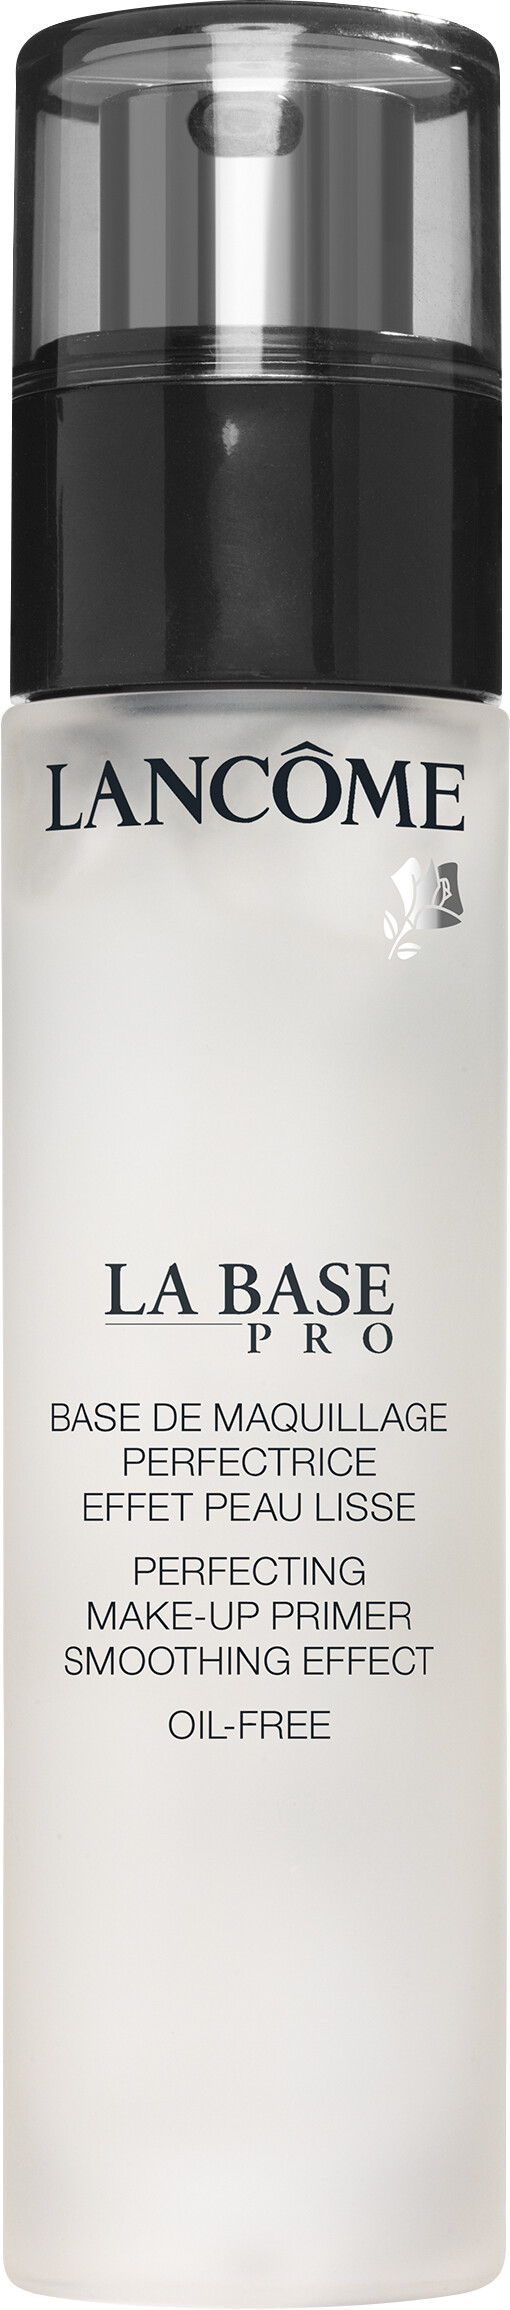 Lancome La Base Pro Perfecting Make-Up Primer 25ml